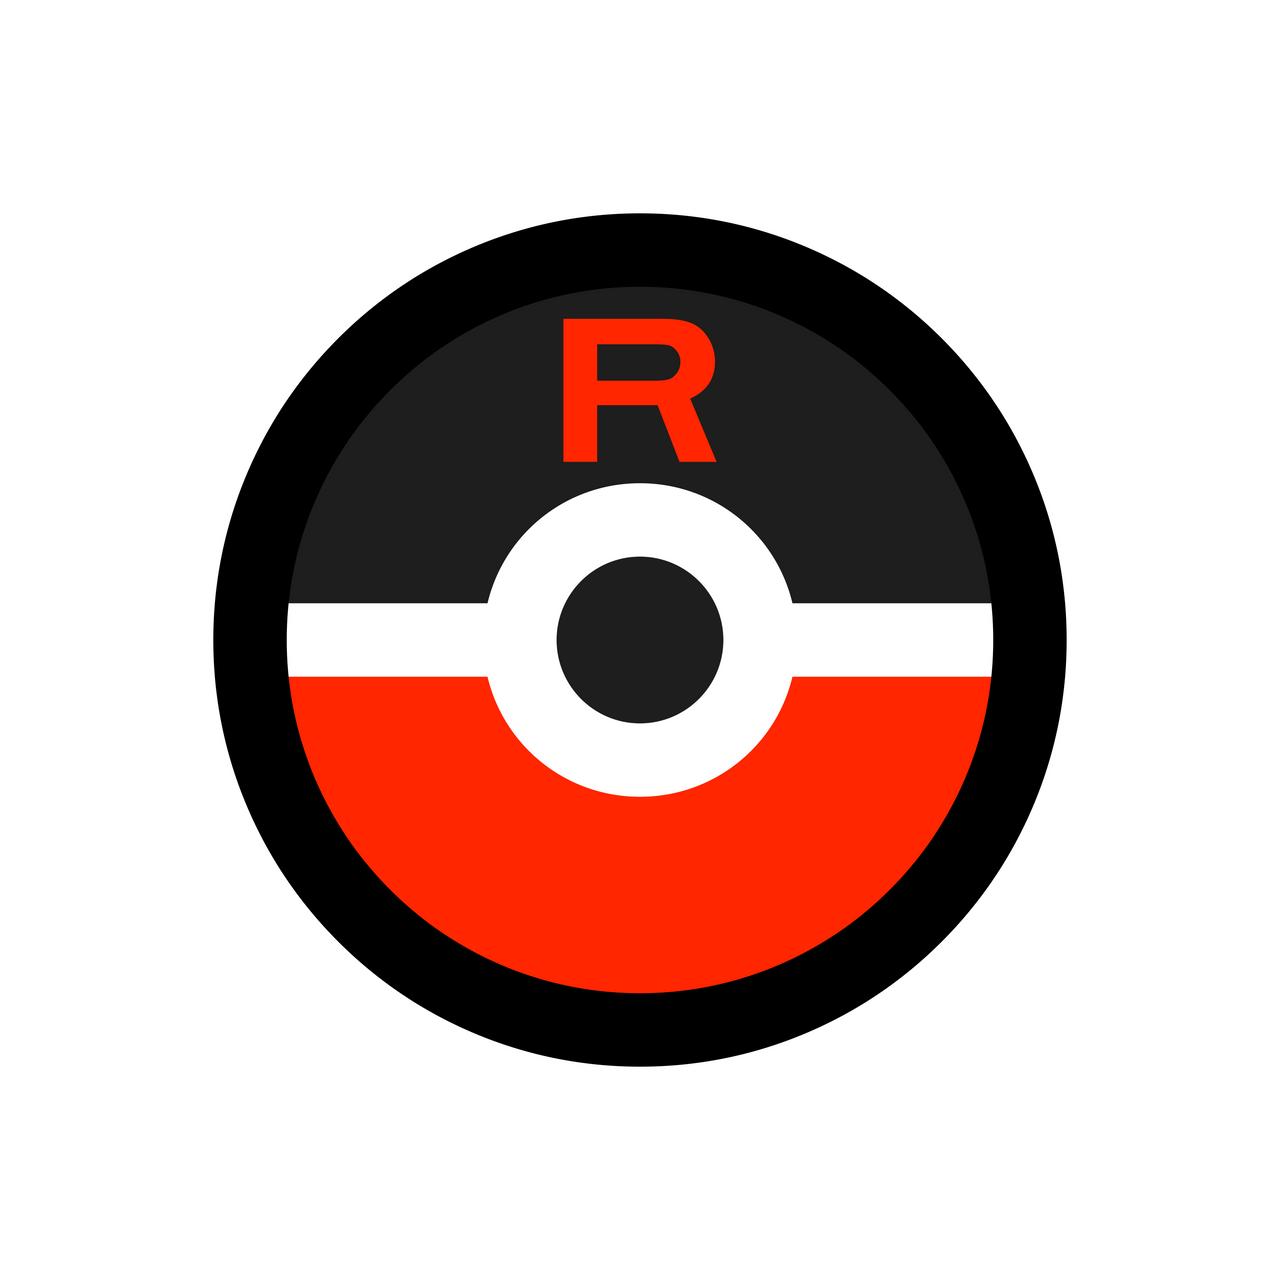 Sprite Pokemon Red by JorMxDos on DeviantArt